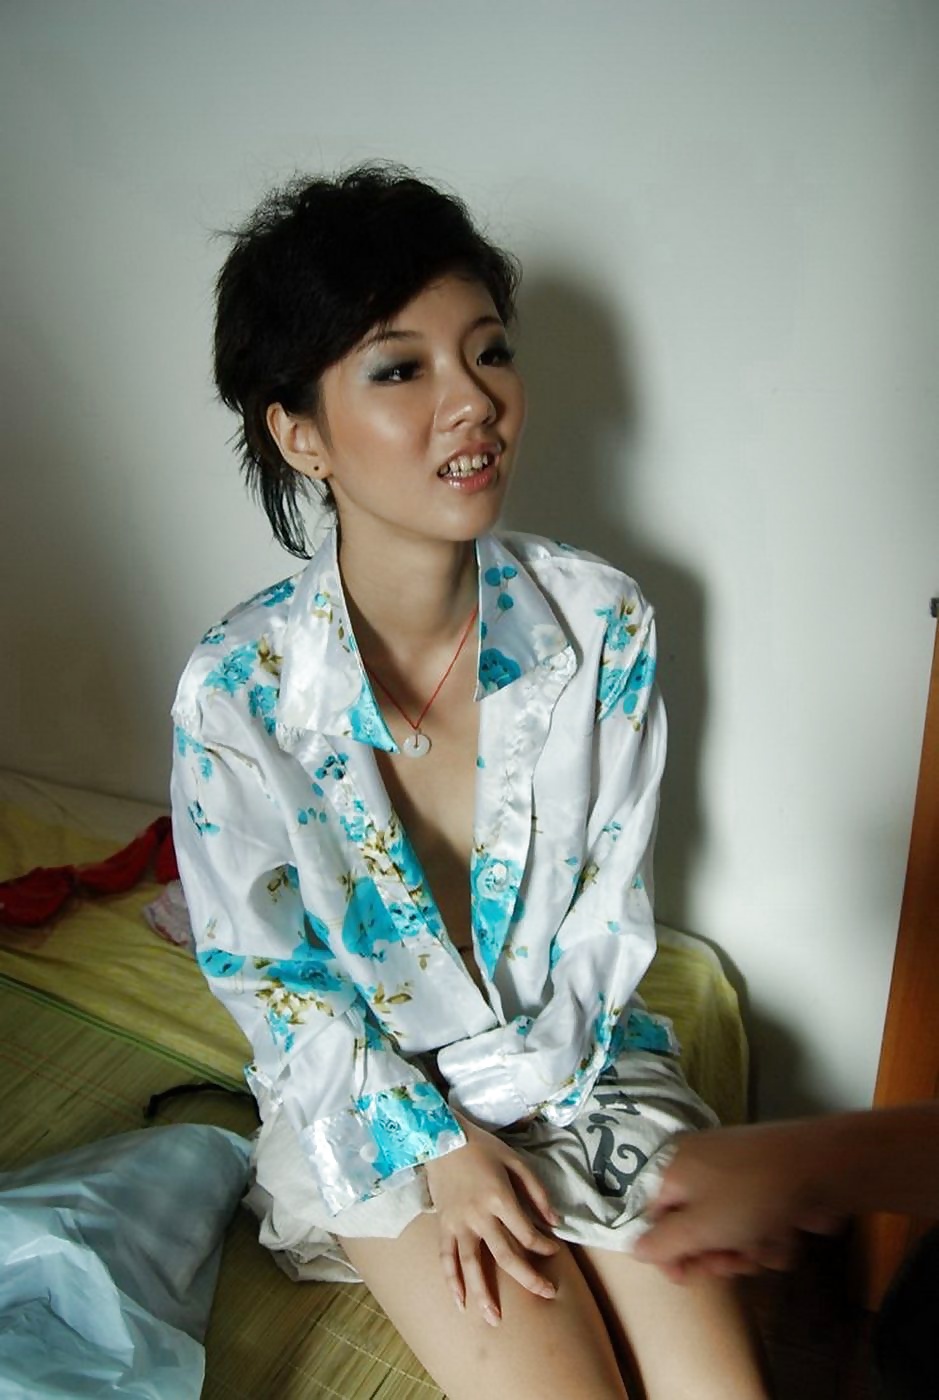 Free Hot amateur asian girl poses naked photos